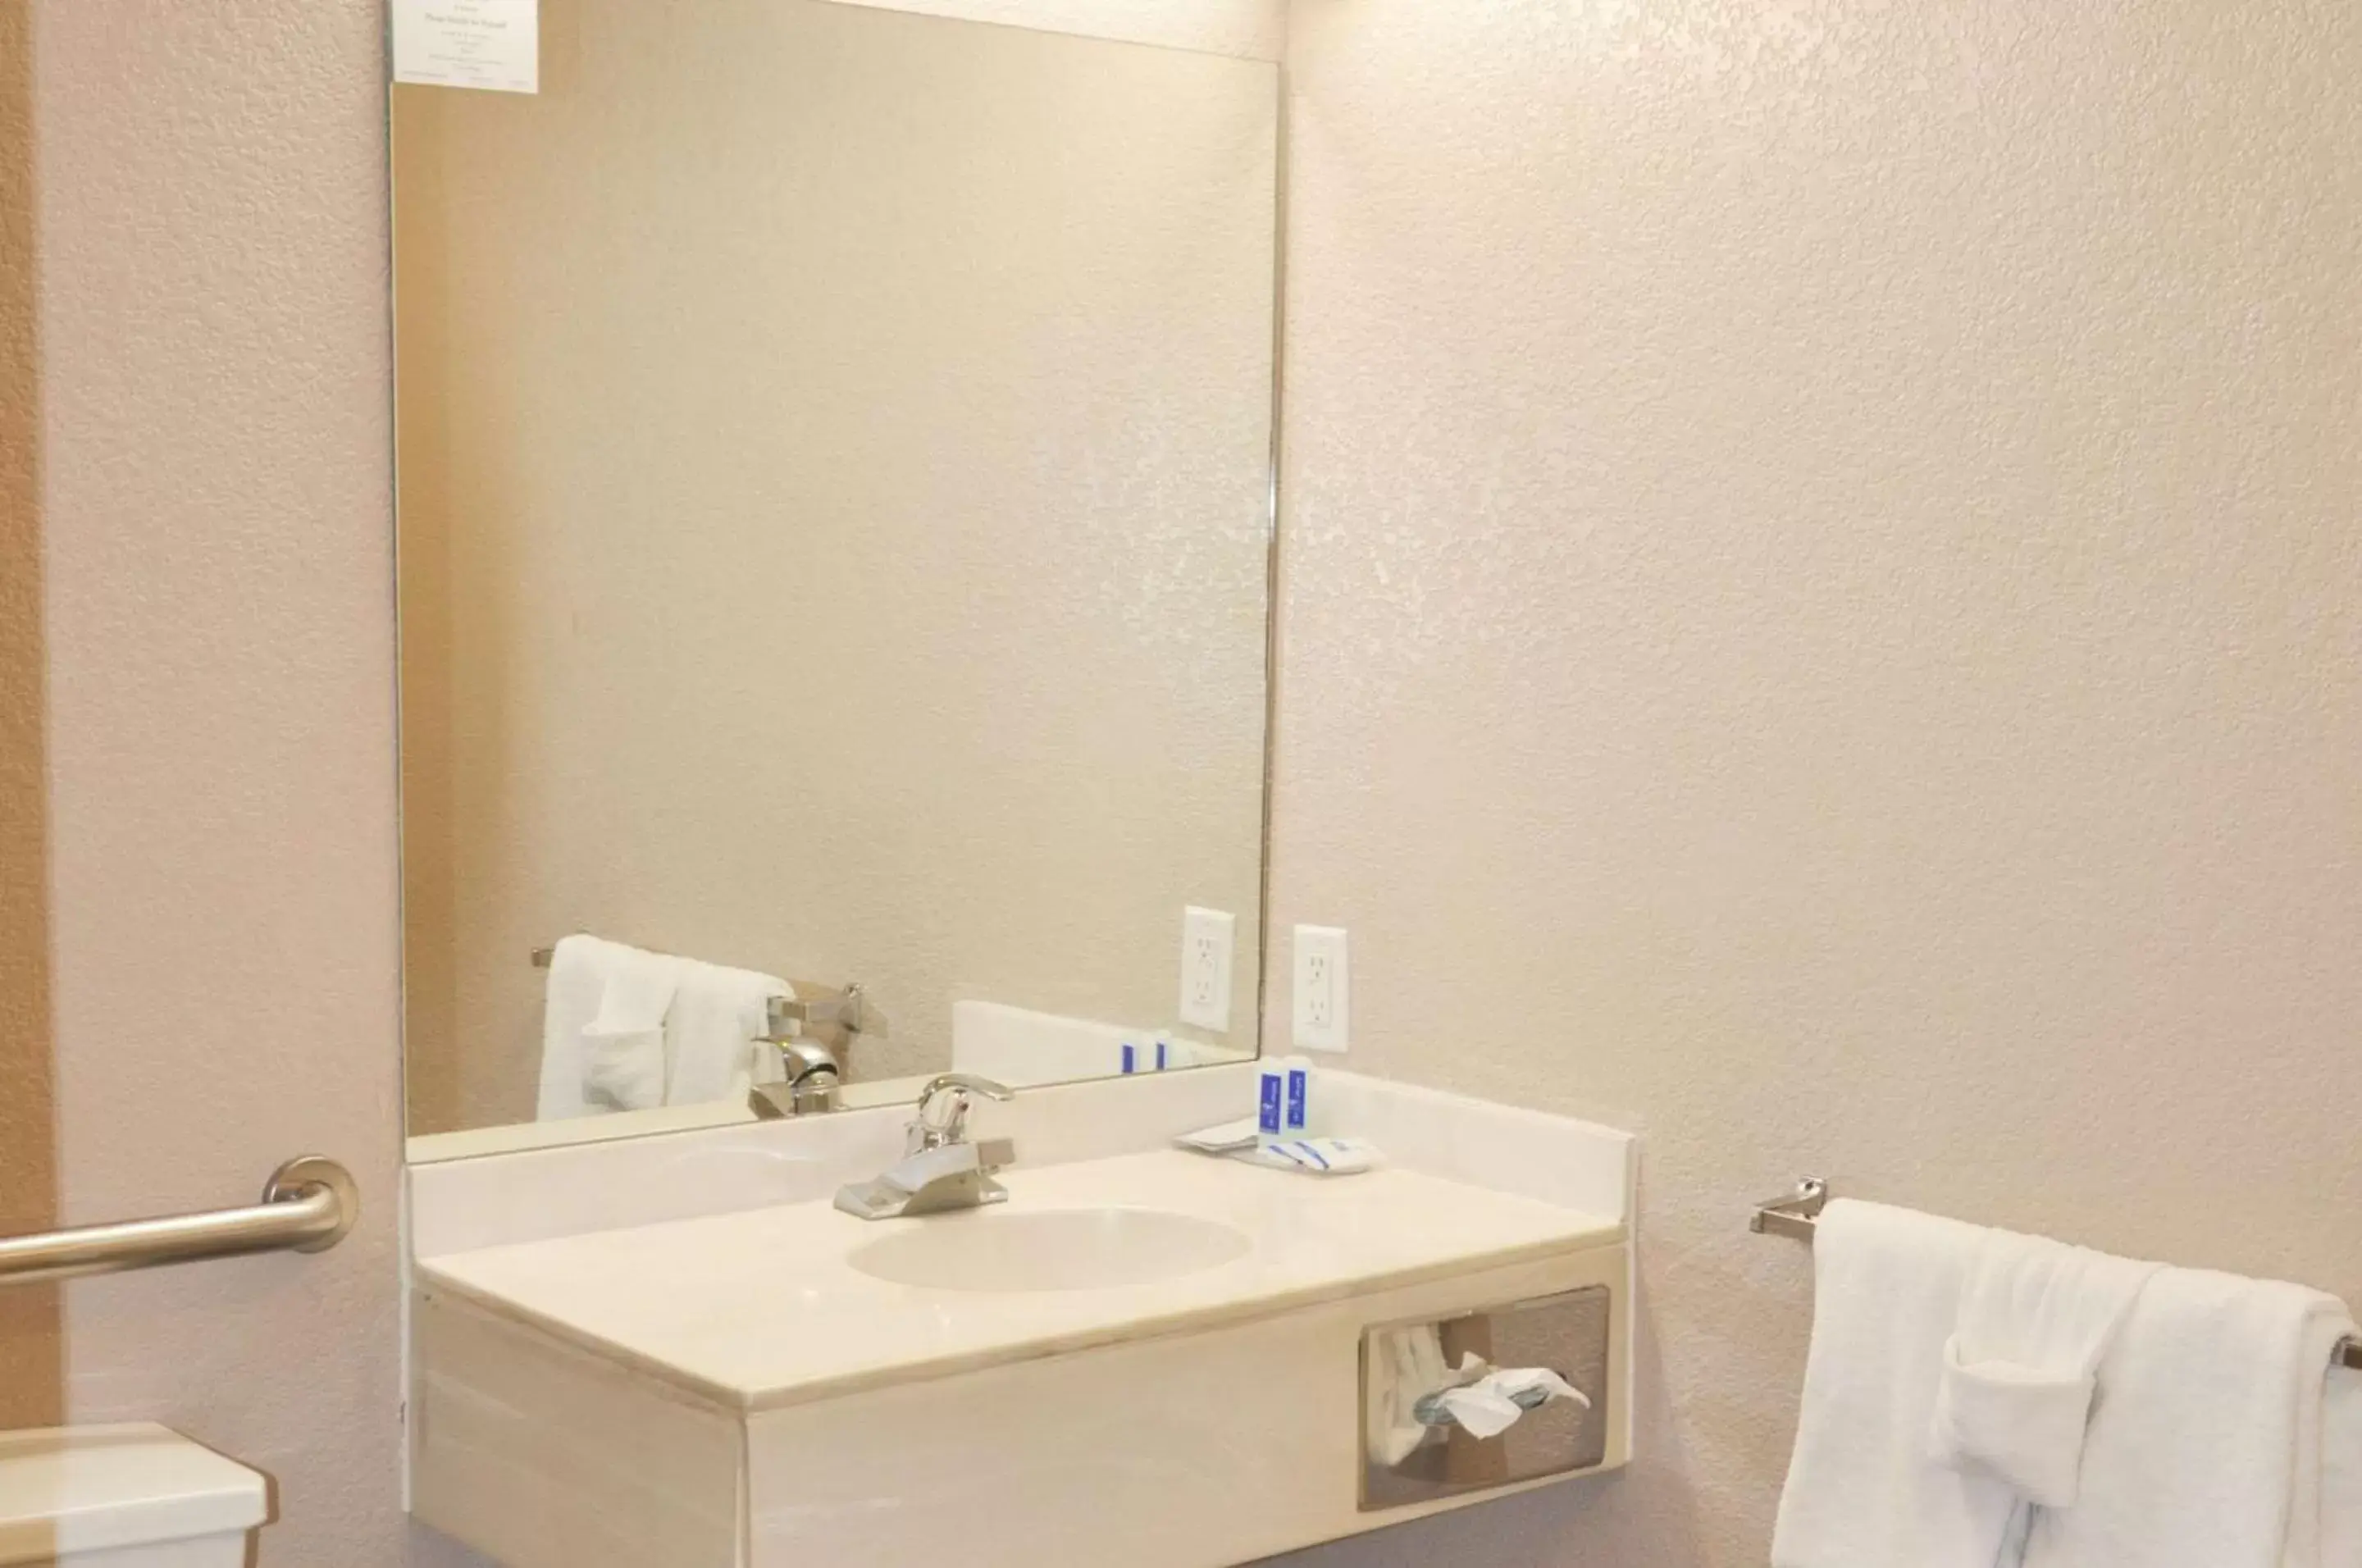 Photo of the whole room, Bathroom in Rodeway Inn Fargo